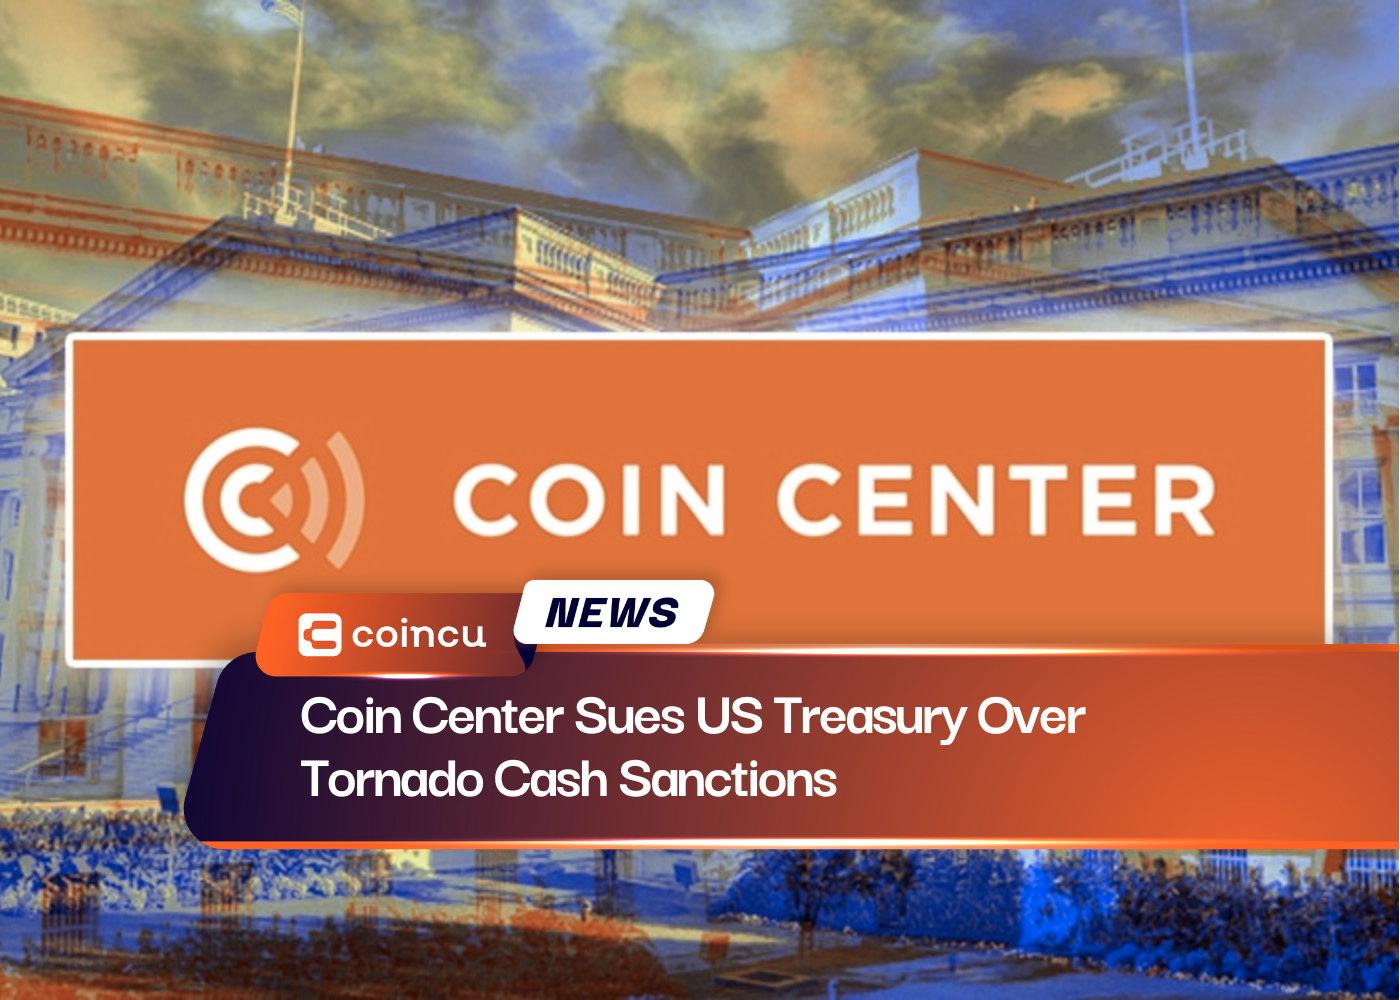 Coin Center verklagt das US-Finanzministerium wegen Tornado-Bargeldsanktionen